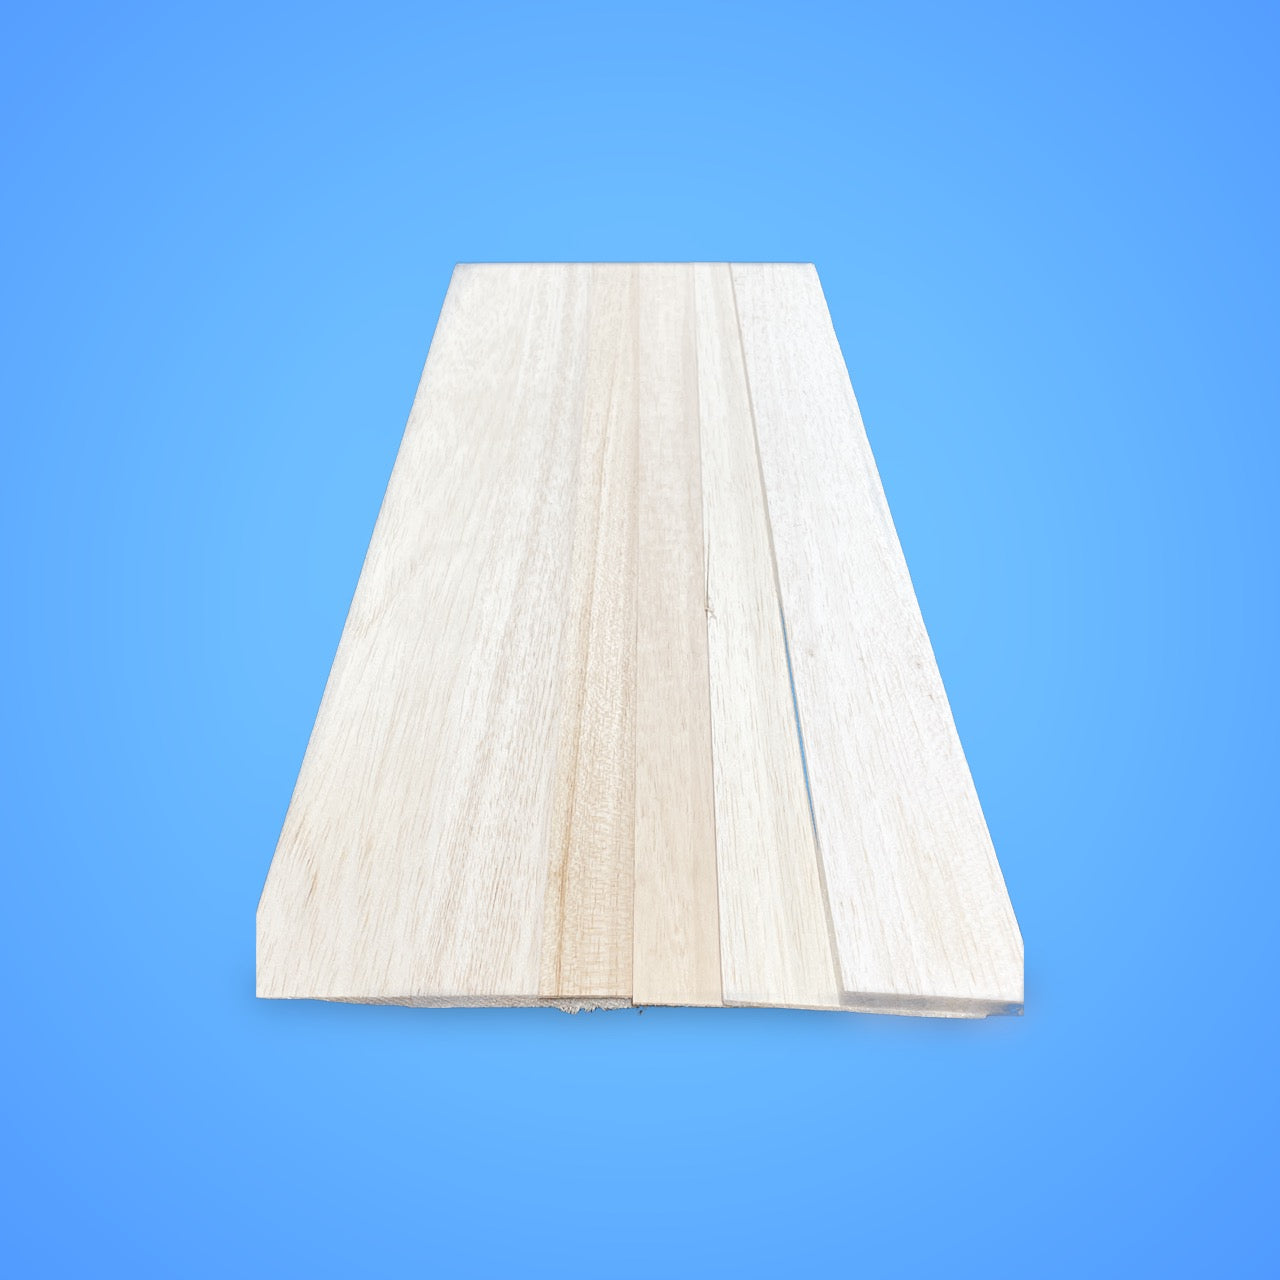 3/4 x 3 x 36 Aero Light Balsa Wood Sheets